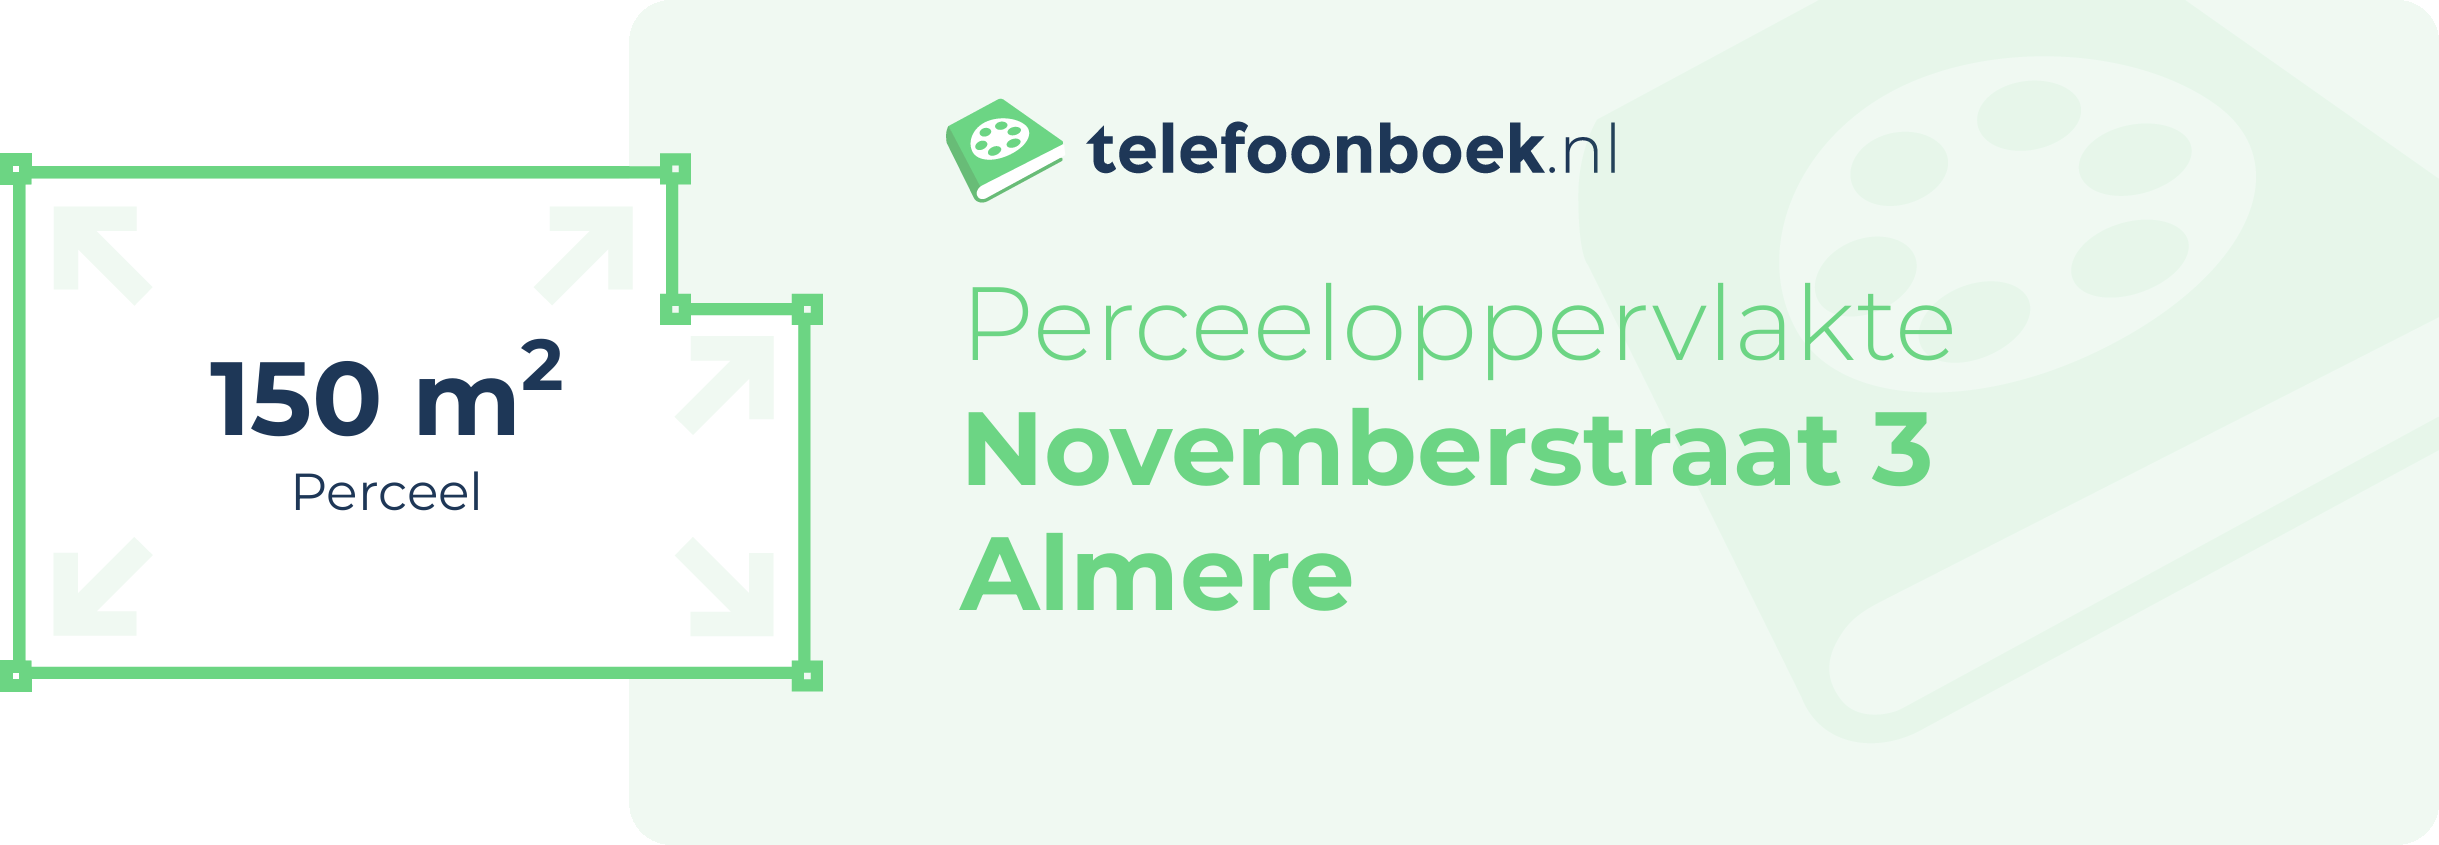 Perceeloppervlakte Novemberstraat 3 Almere